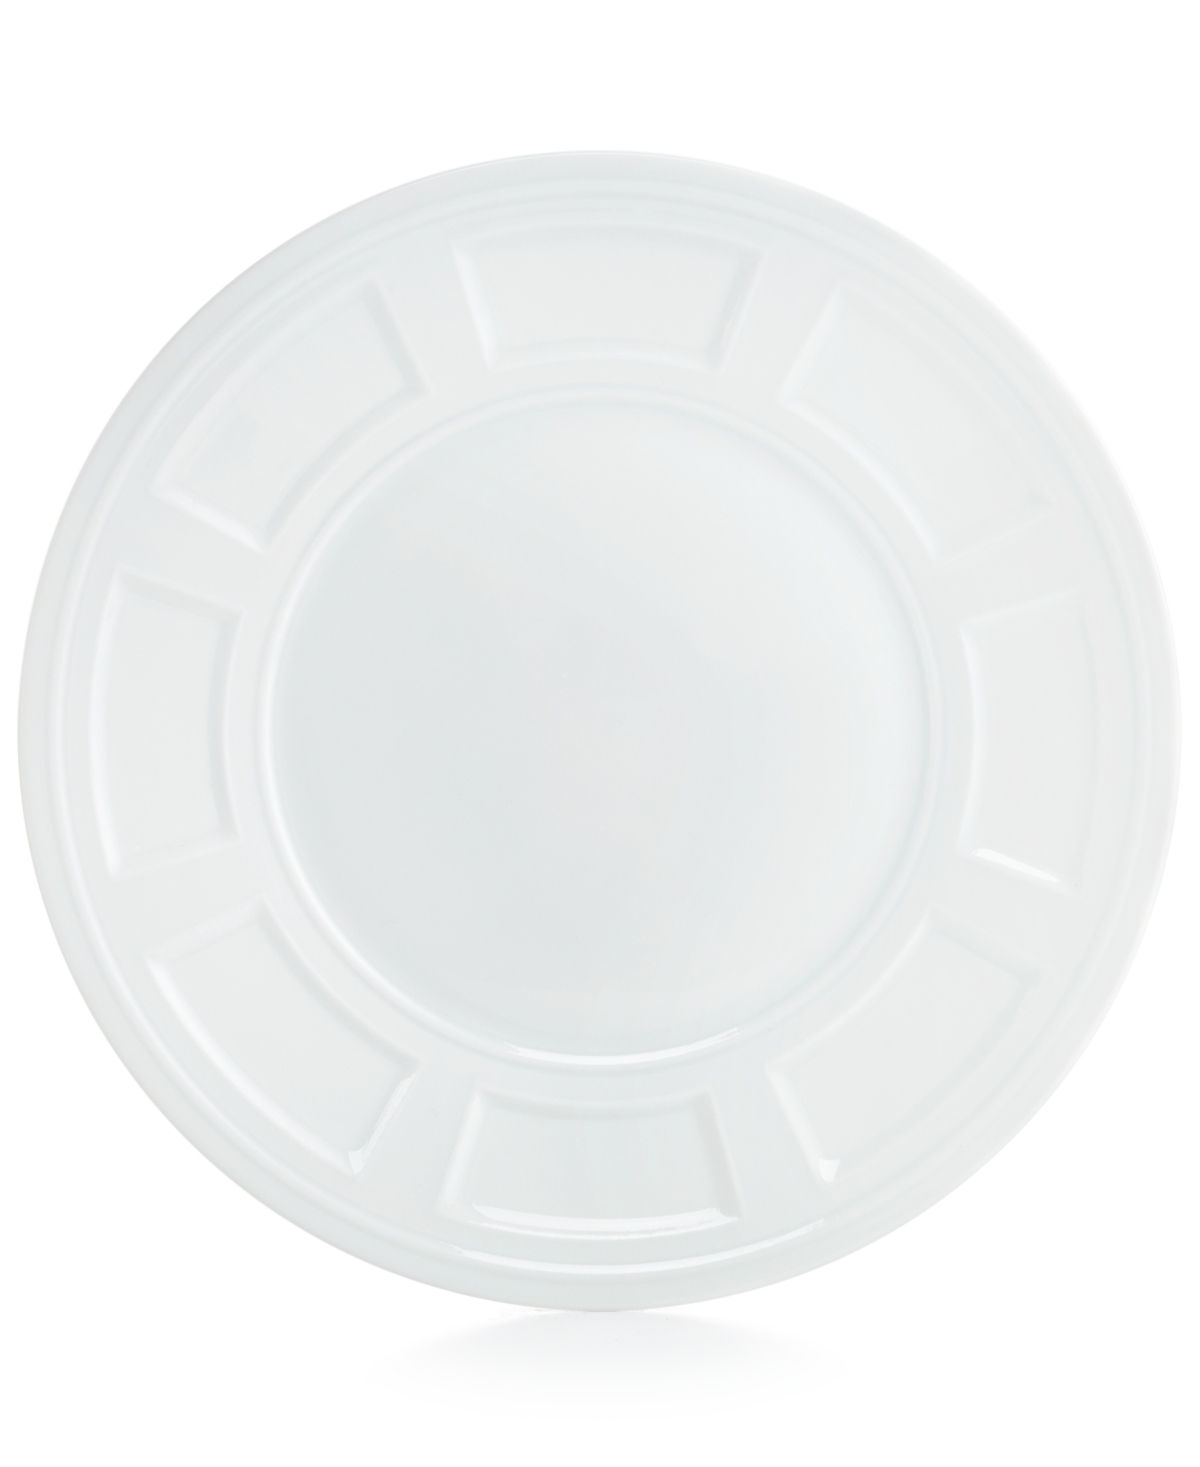 Bernardaud Naxos Salad Plate, 8.5